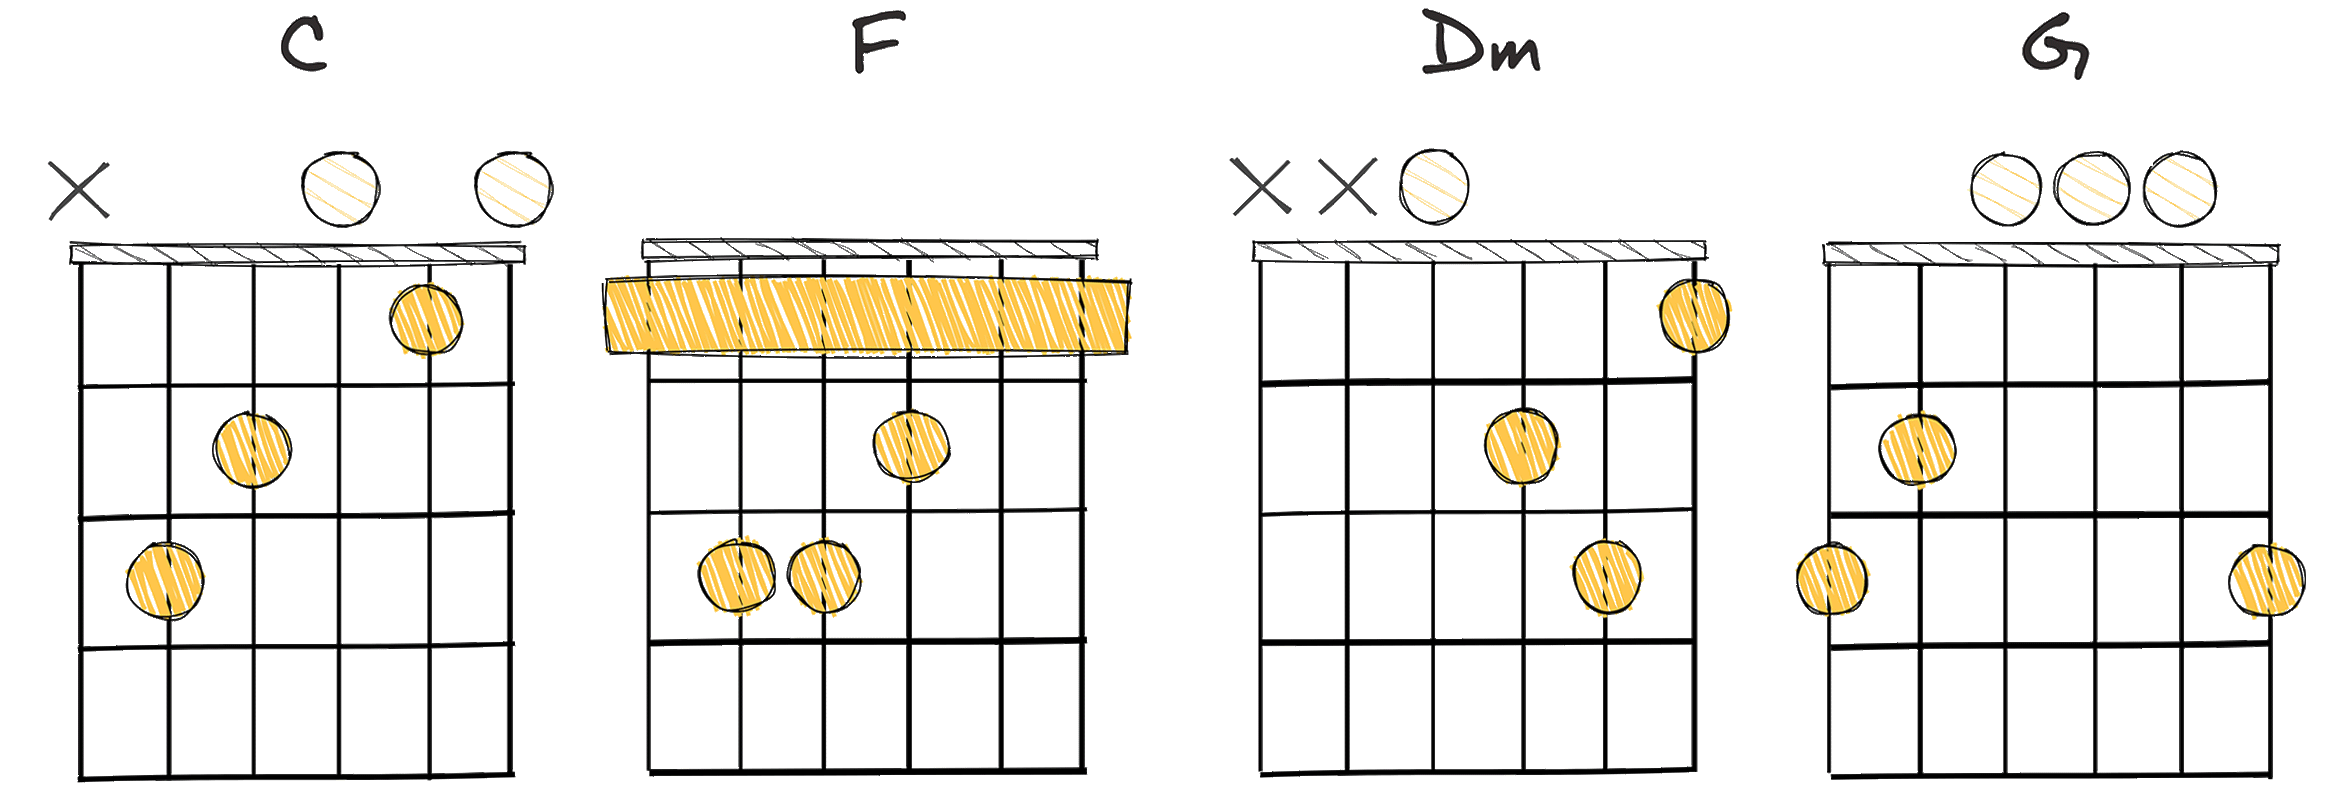 I - IV - ii - V (1 - 4 - 2 - 5) chords diagram